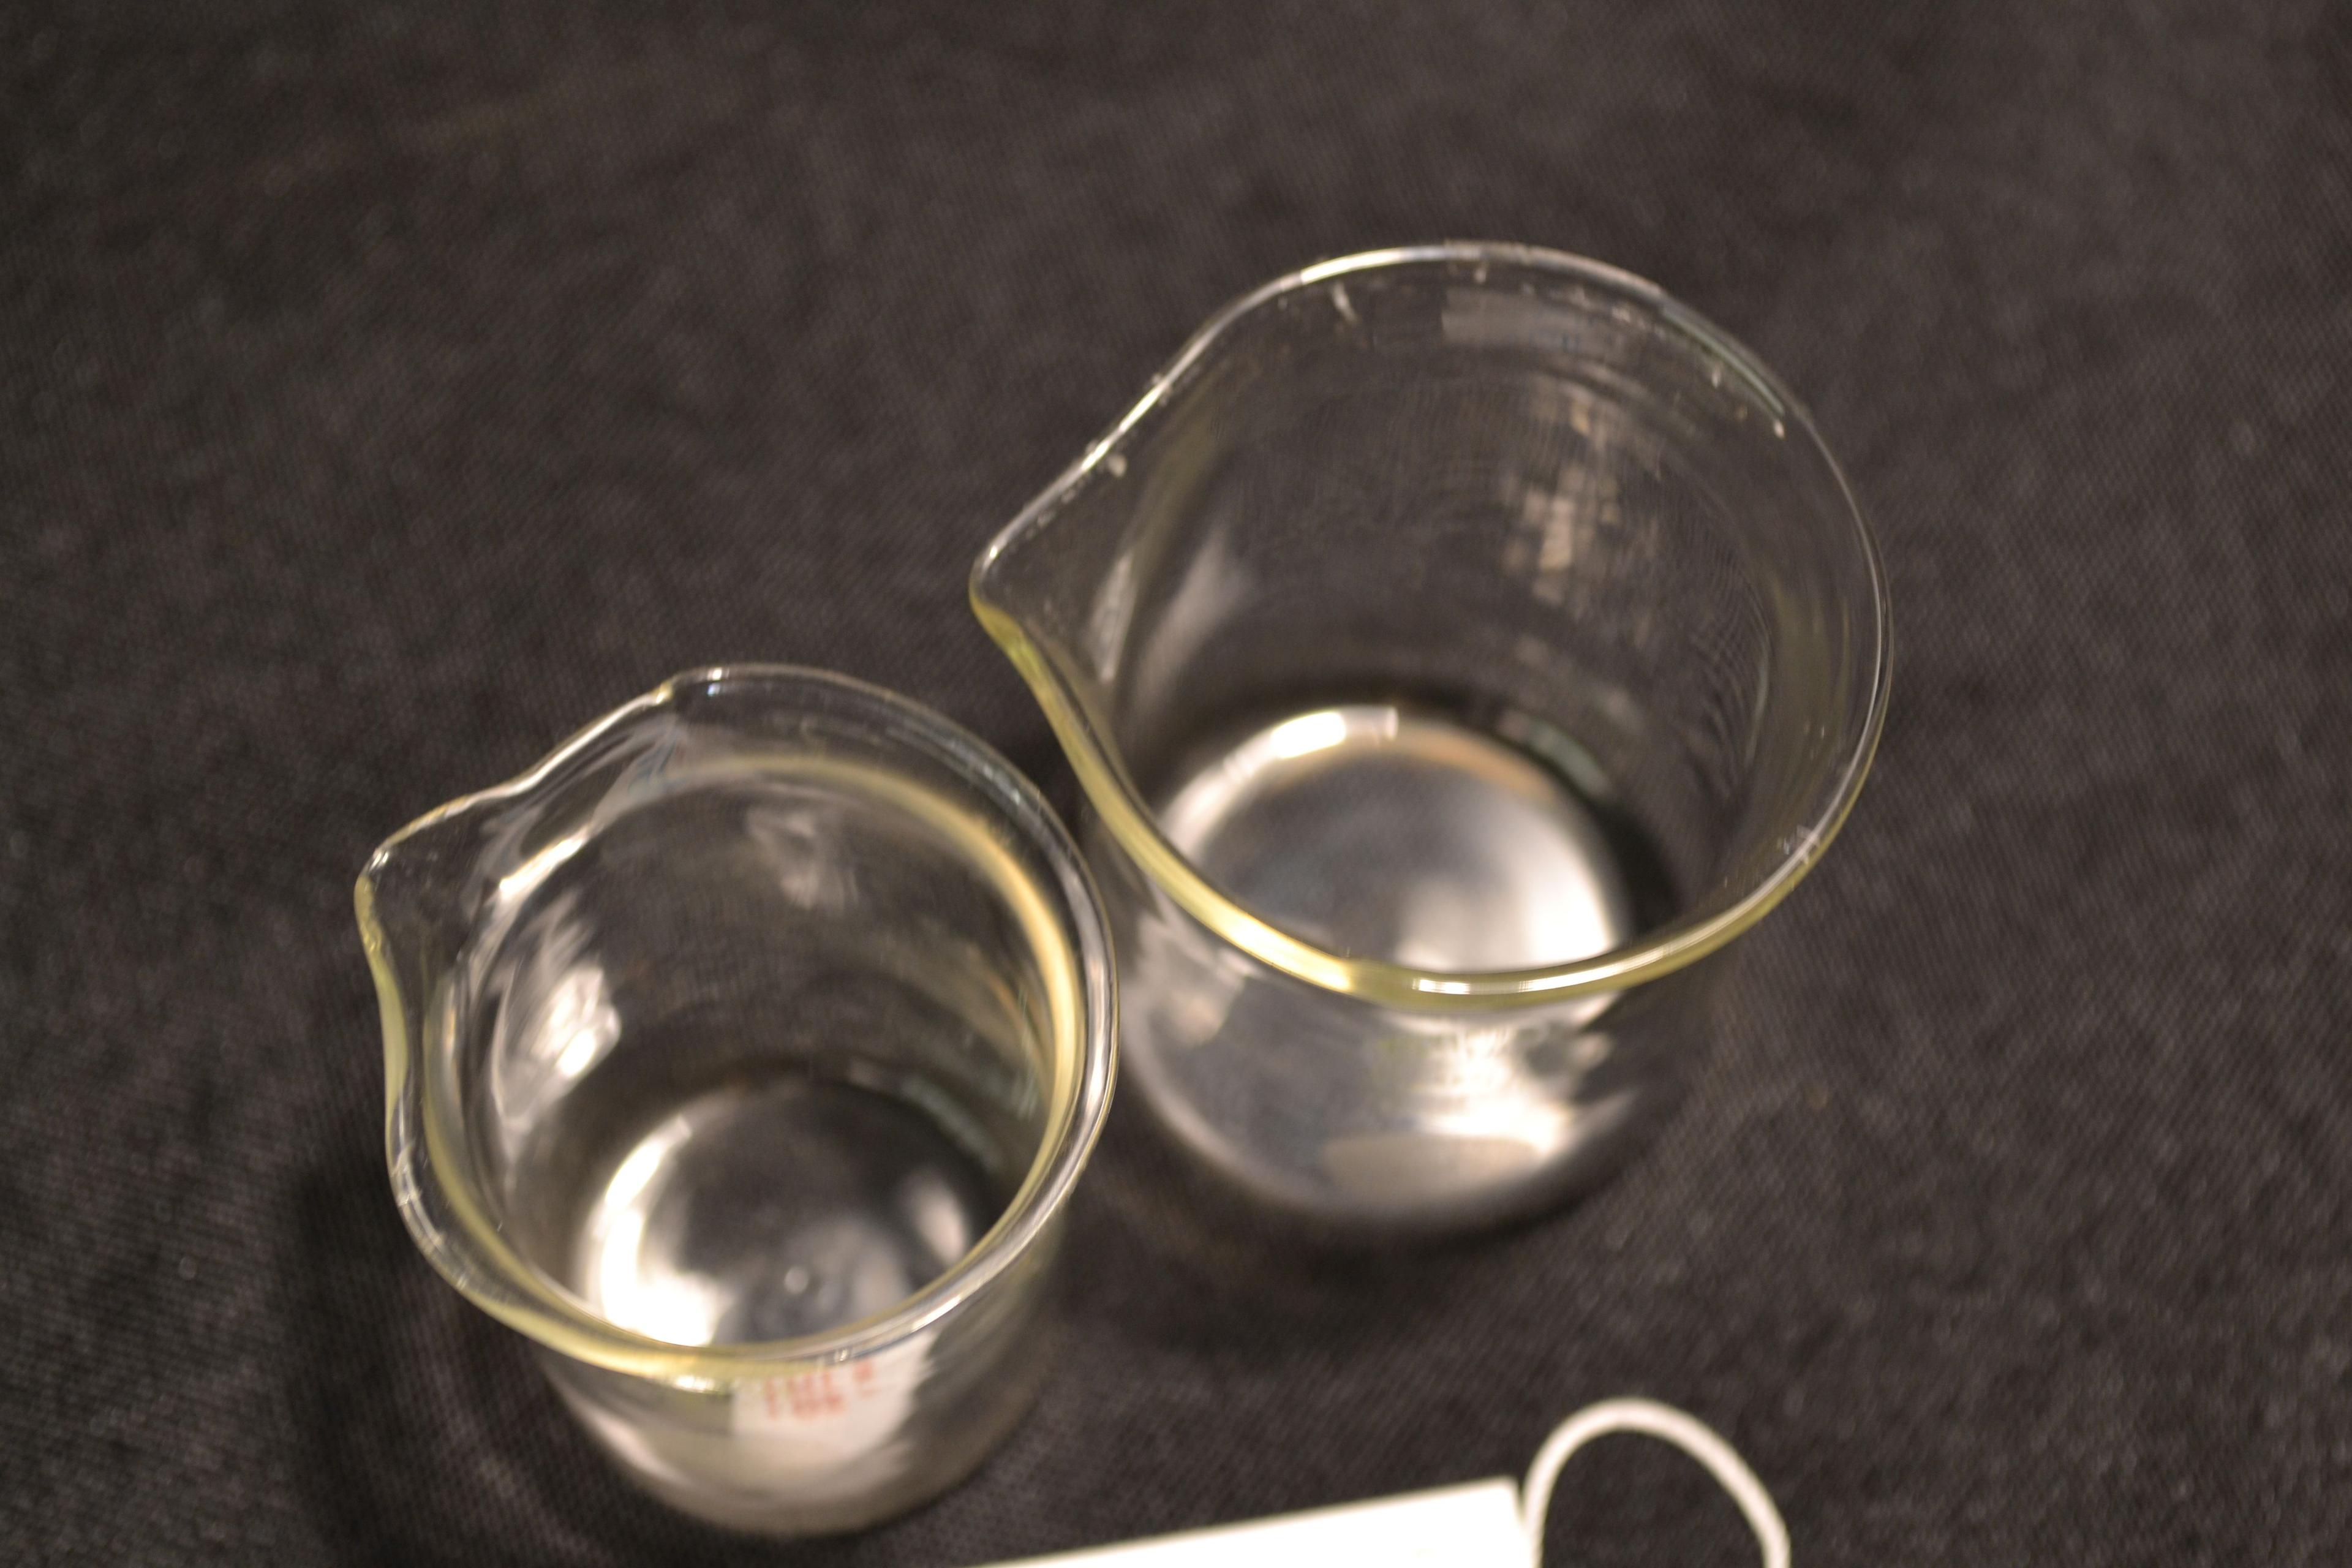 Pair of Small Pyrex Beakers; 2" High